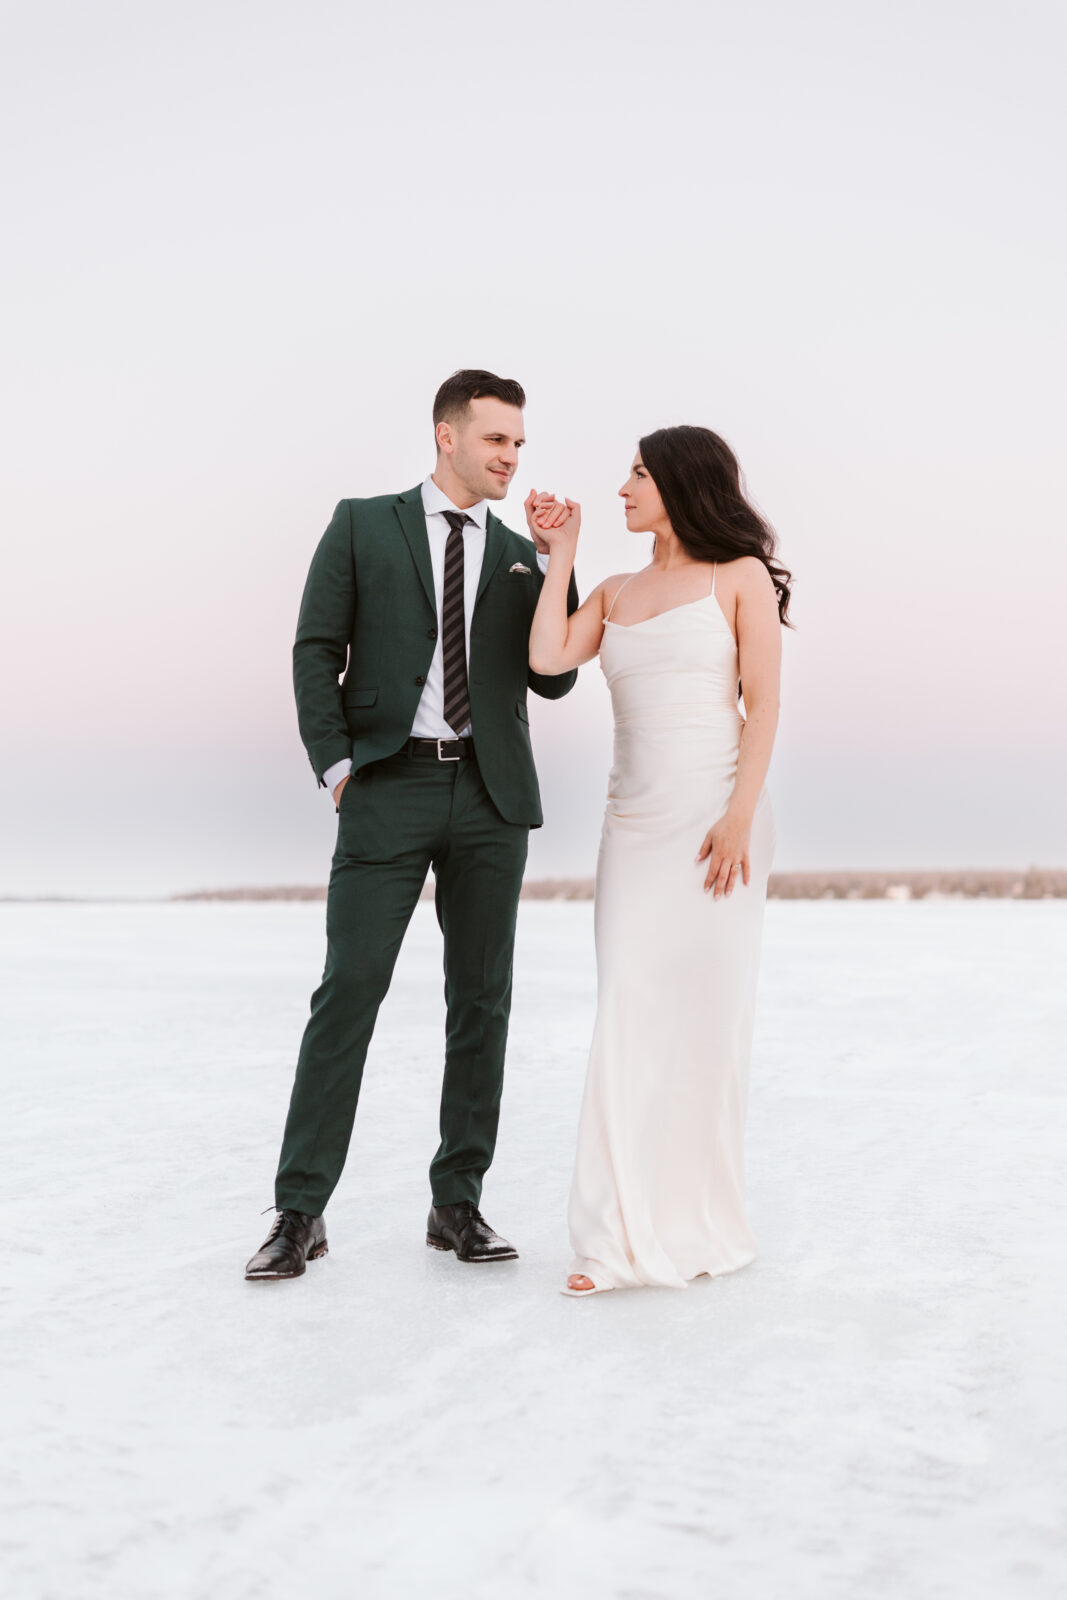 Small wedding winter in Ontario. Bride and Groom on ice in Ontario. photographer Mary Zita Payne who photographs winter weddings in the Kawartha Lakes